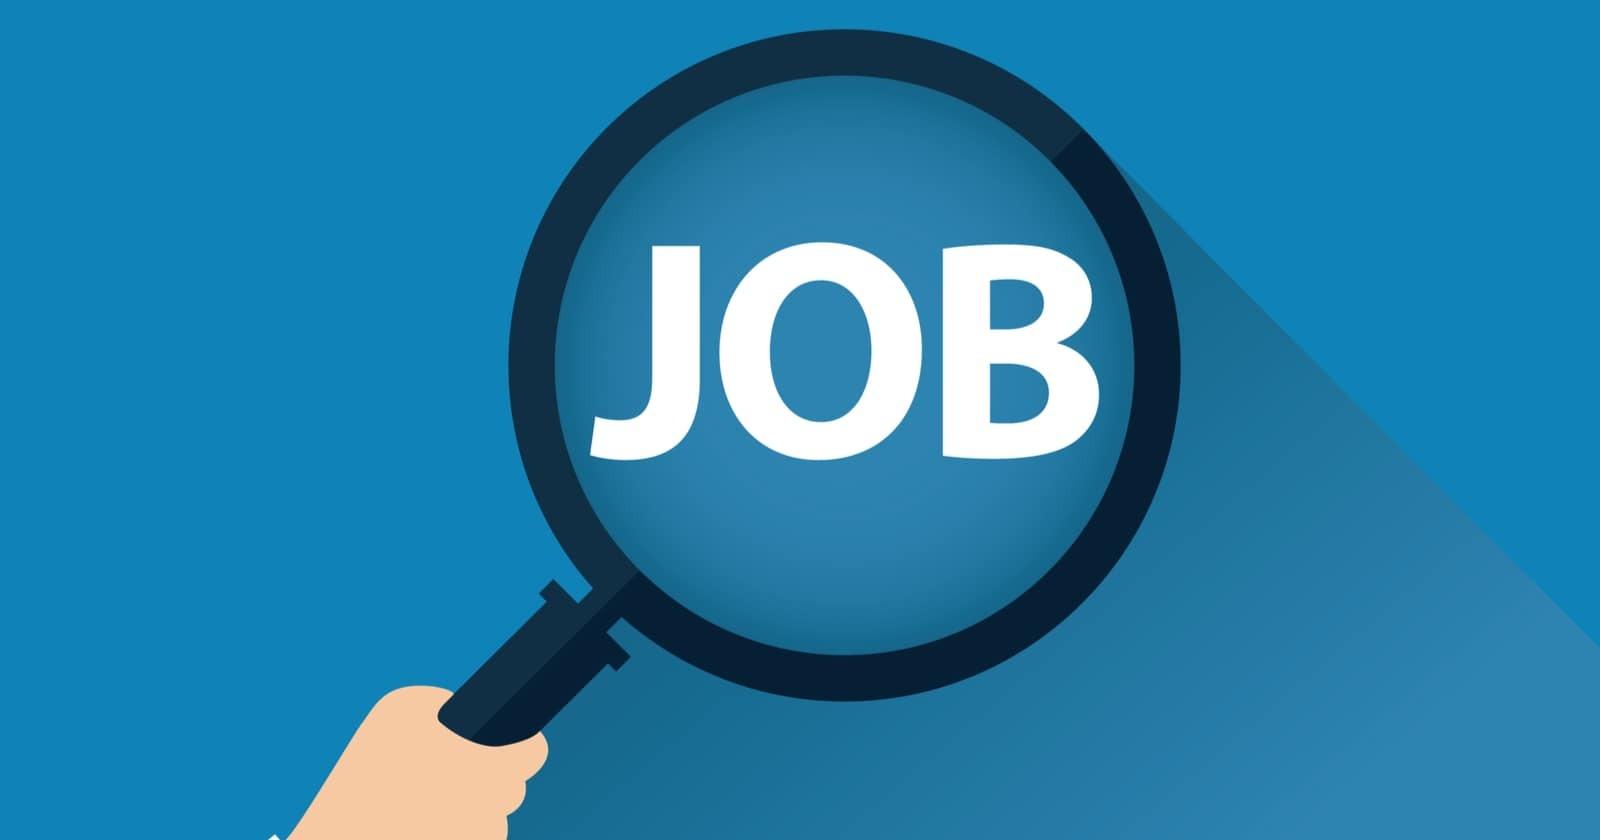 AMC Sahayak Junior Clerk Recruitment 2024: Apply Online for 612 Vacancies